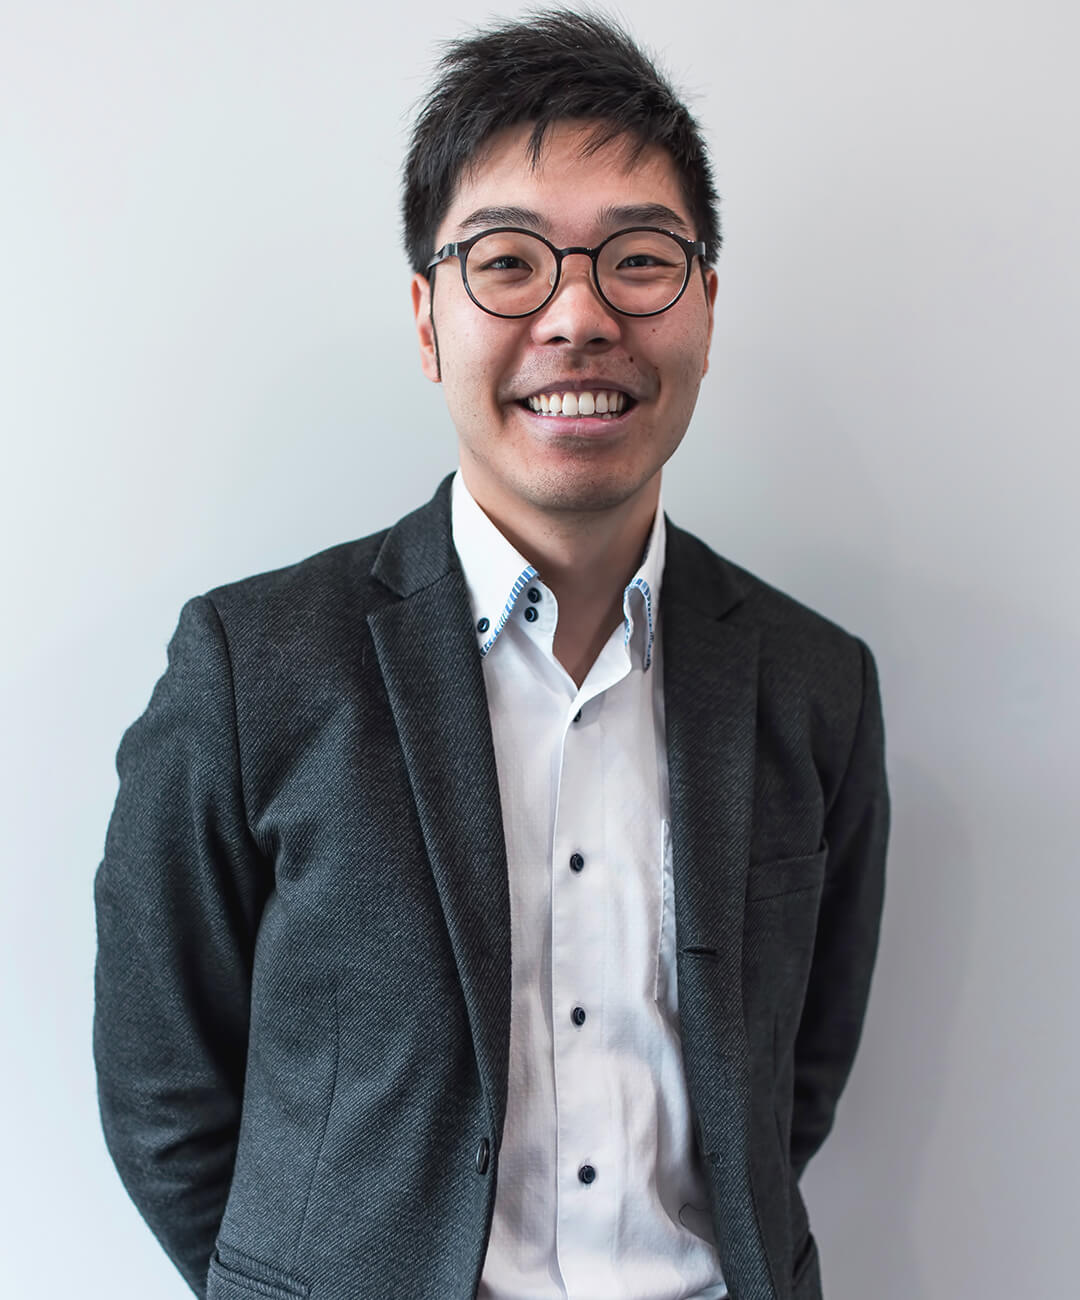 Dr. David Zhang is the Principal Orthodontist at Blackburn Orthodontics